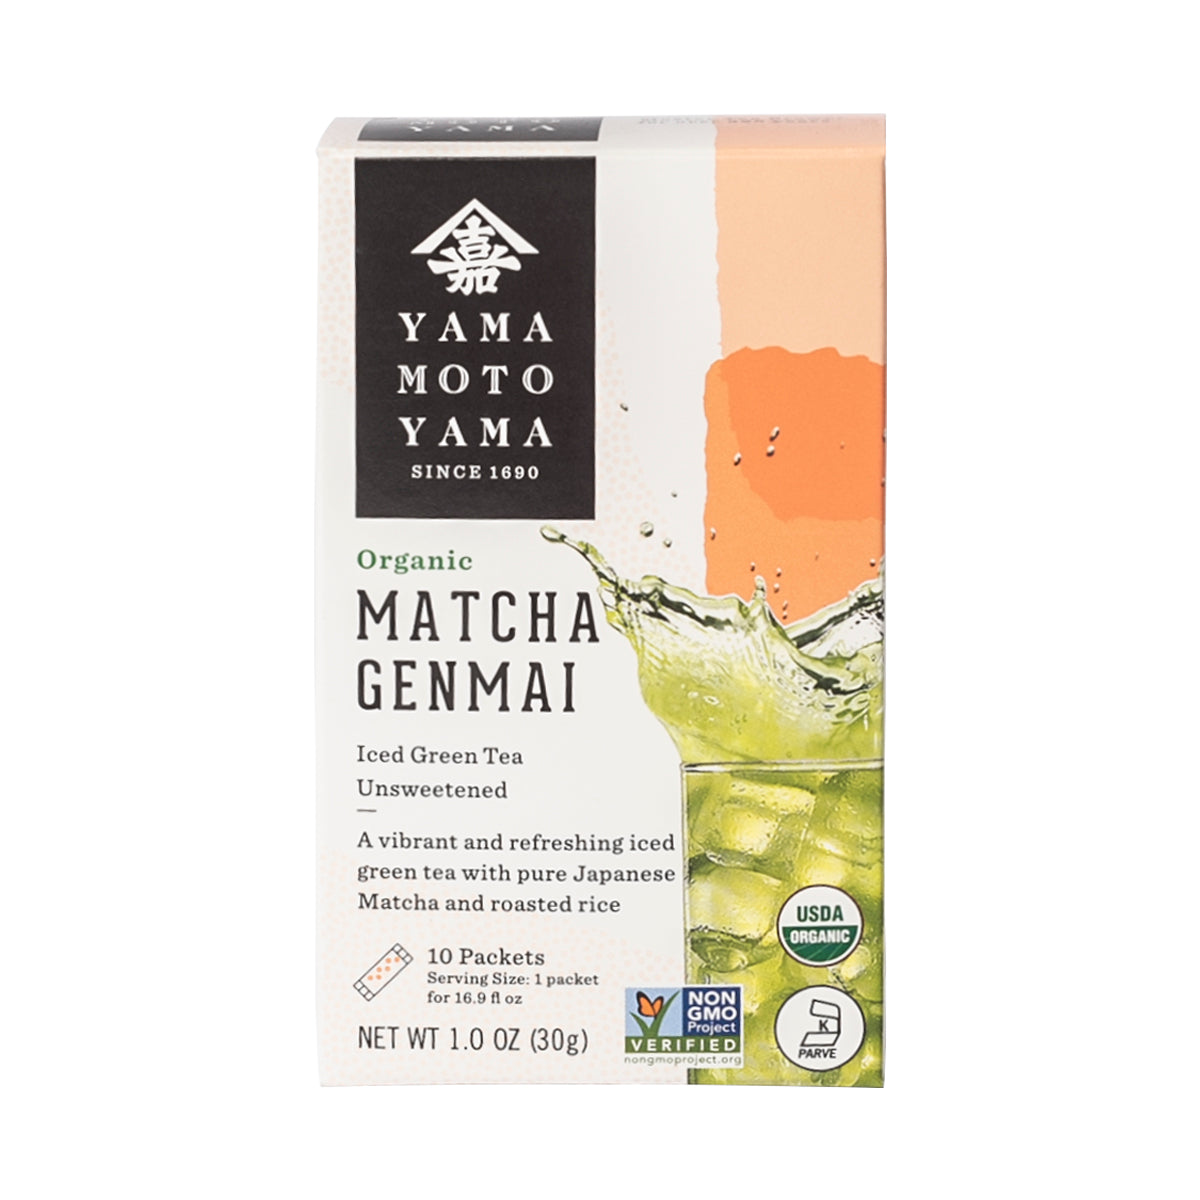 Organic Matcha Genmai Iced Green Tea